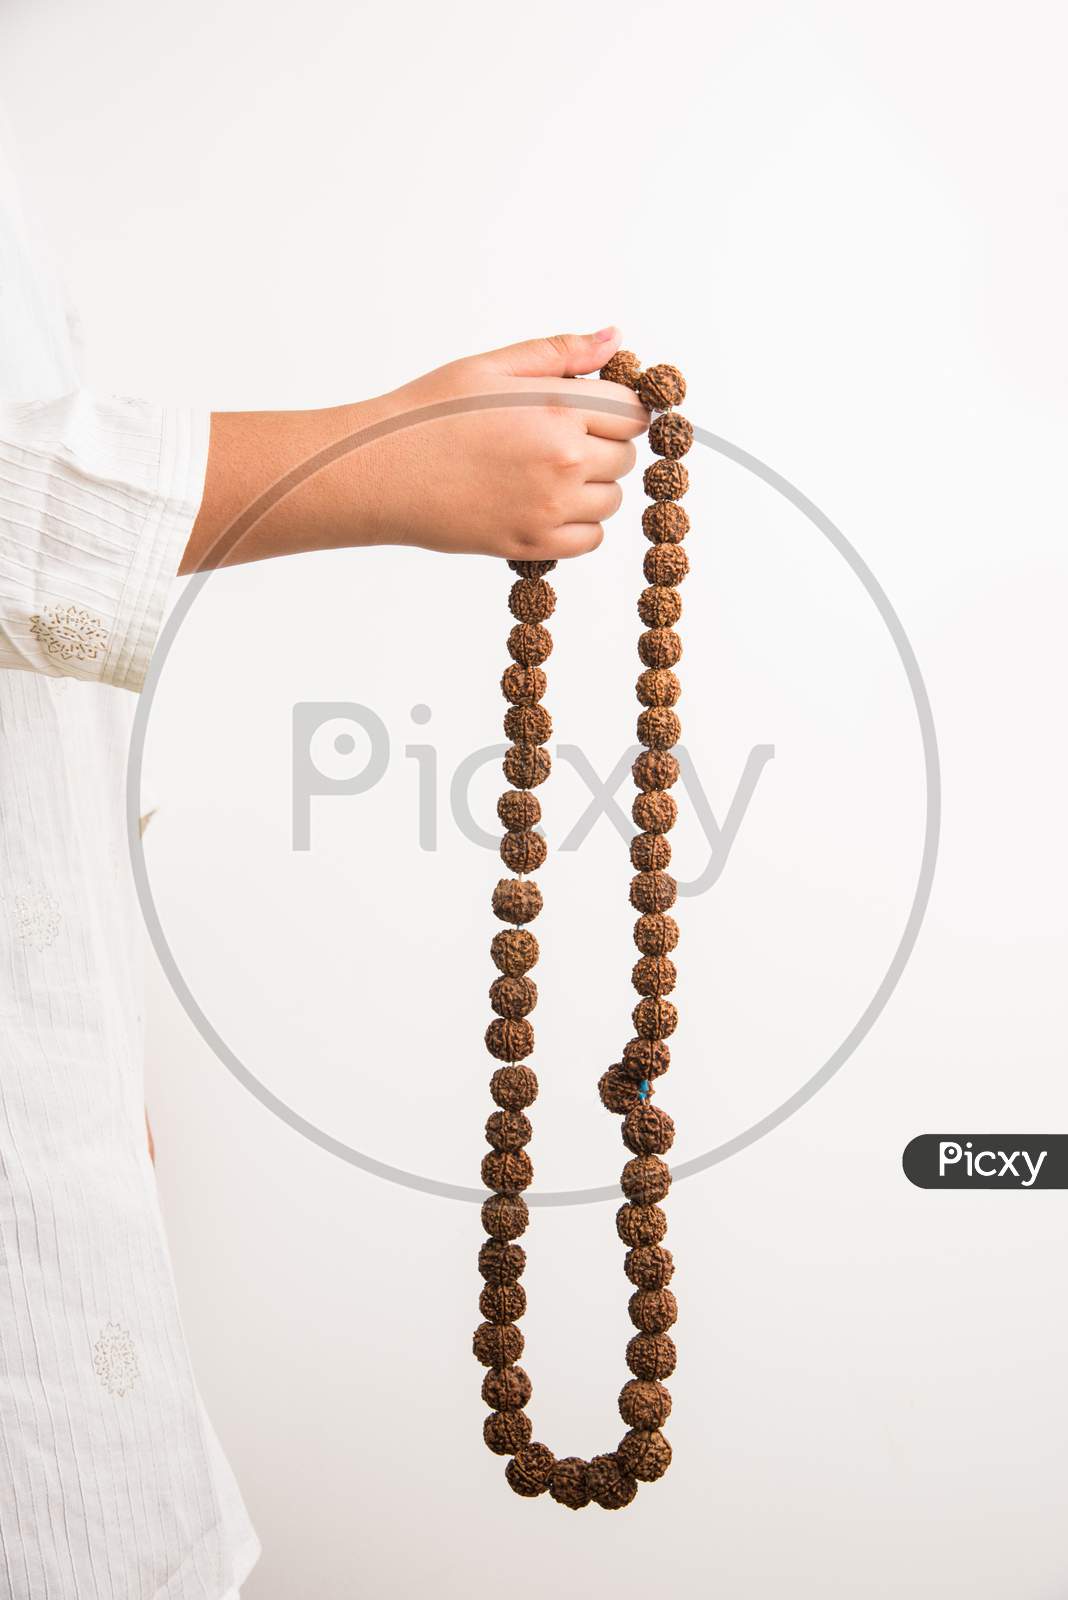 Meditation with rudraksha mala or rosary beads